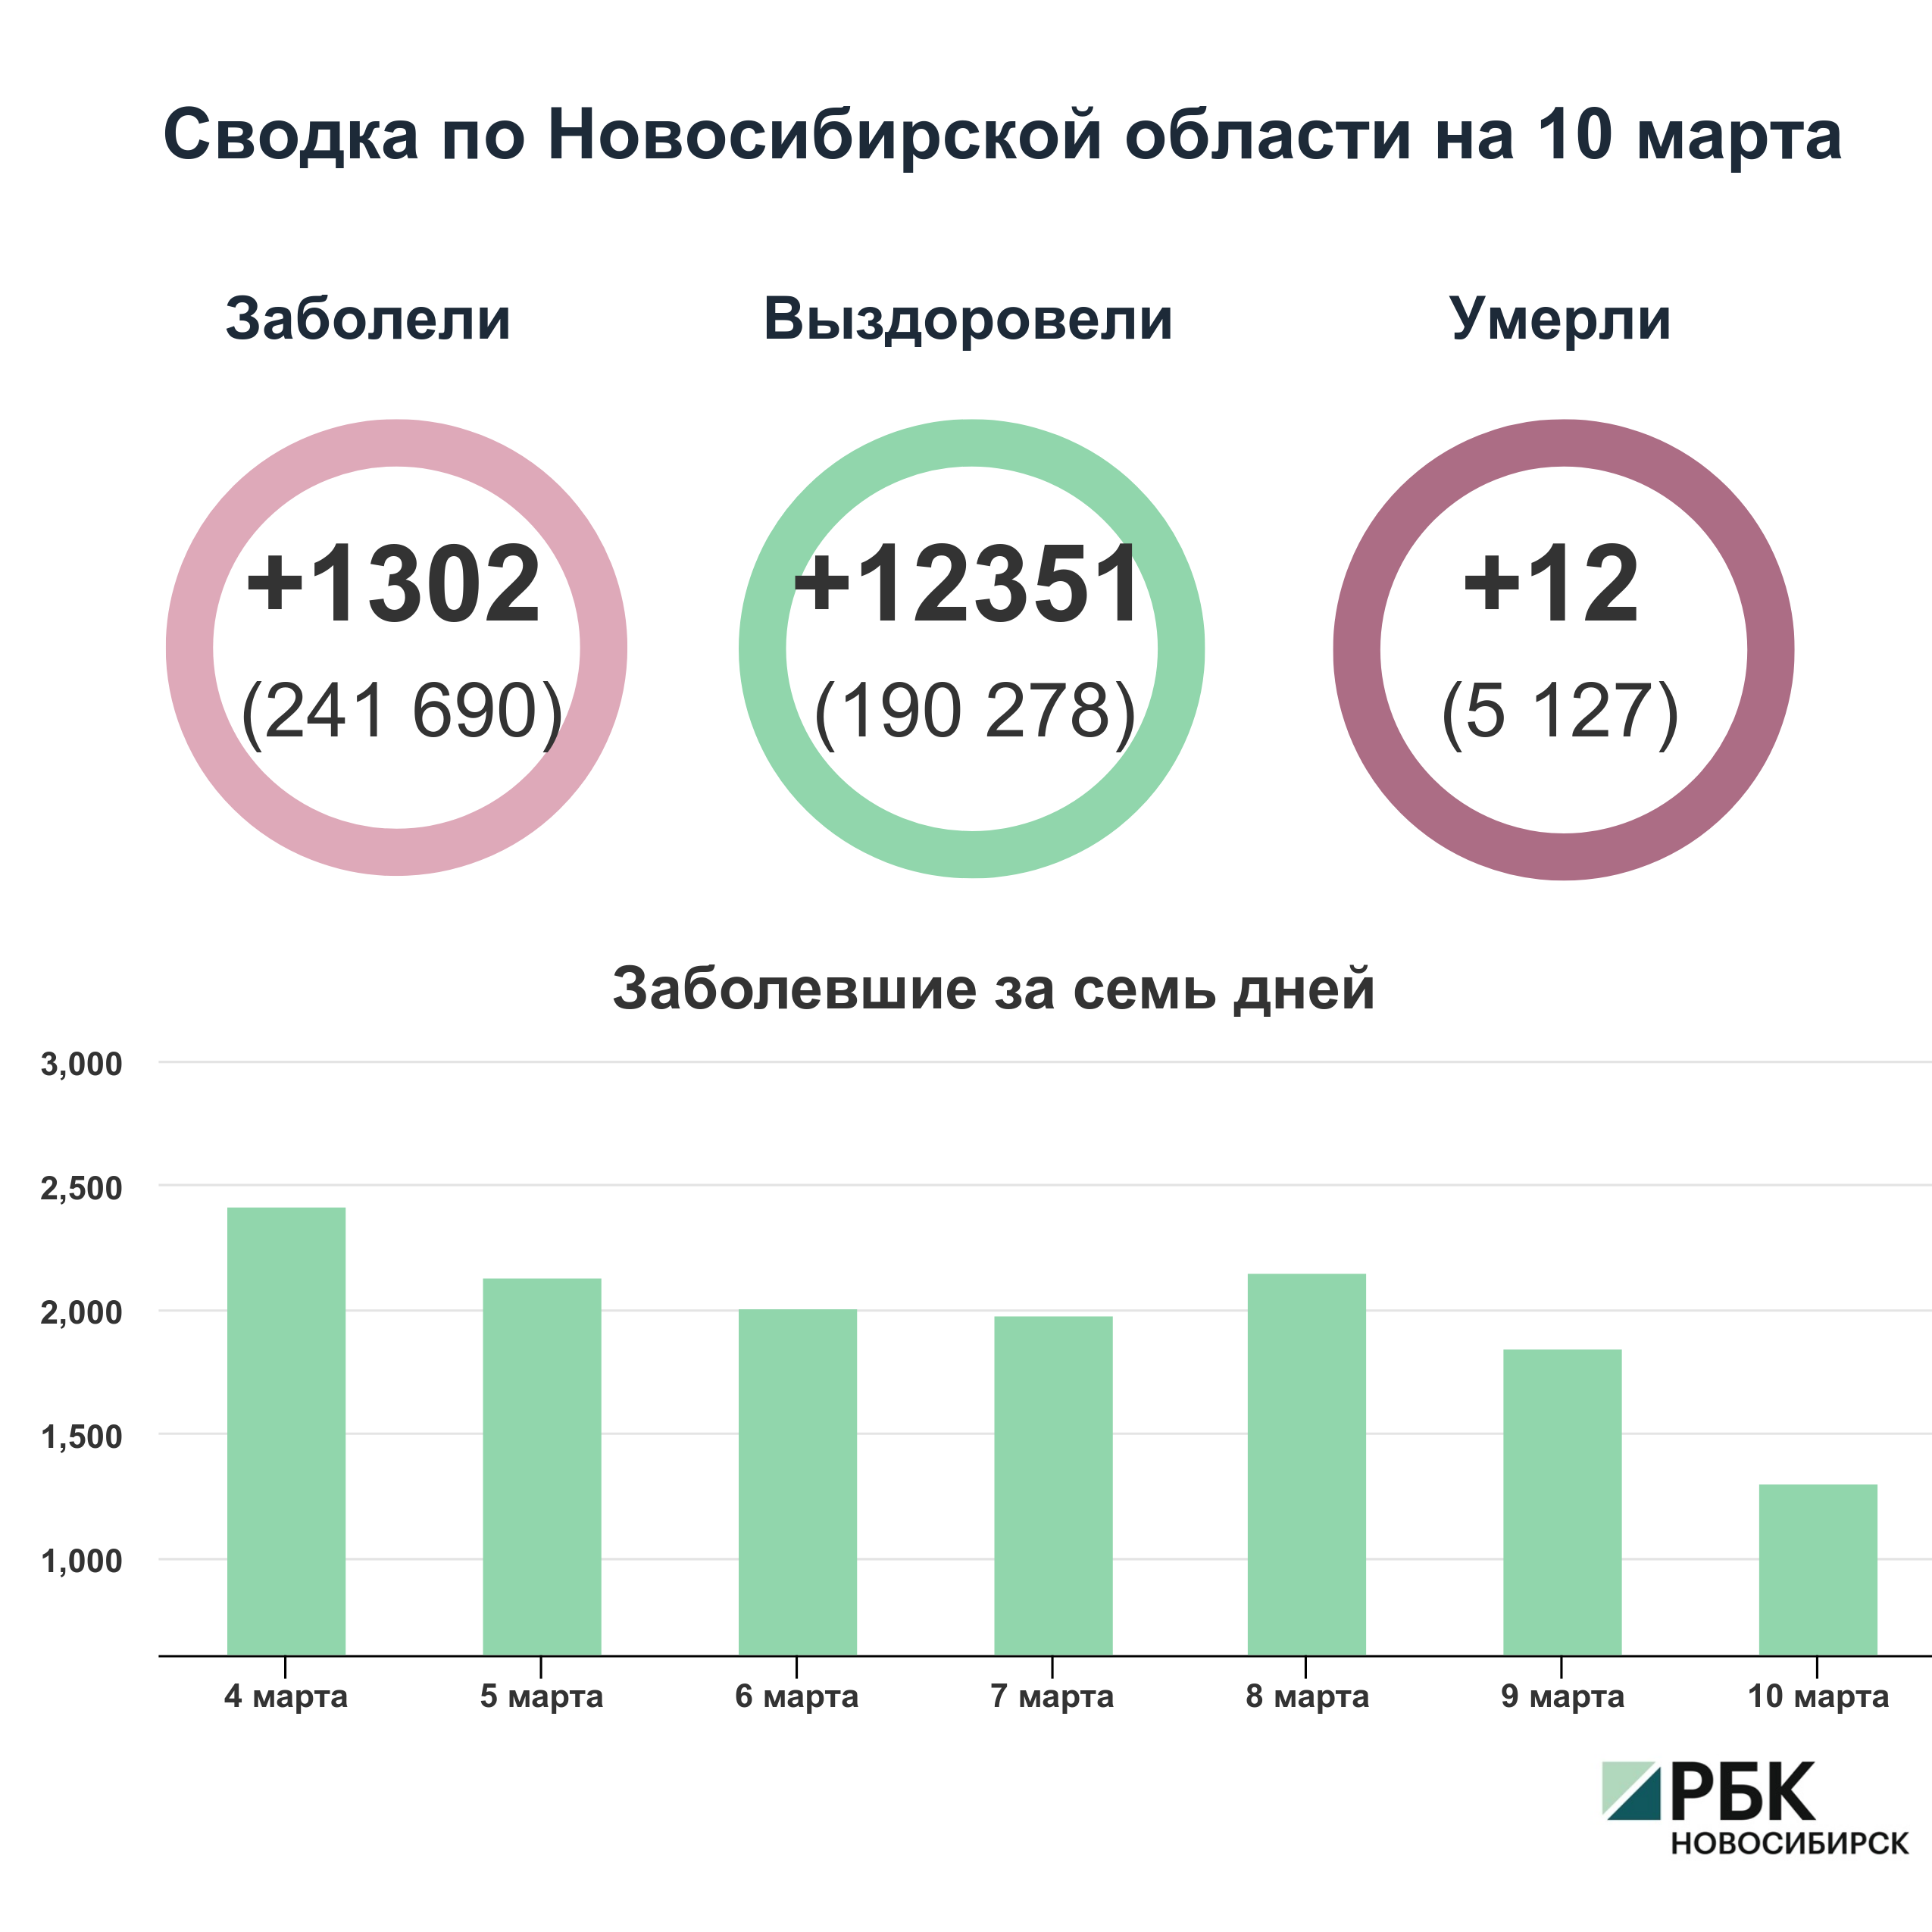 Коронавирус в Новосибирске: сводка на 10 марта